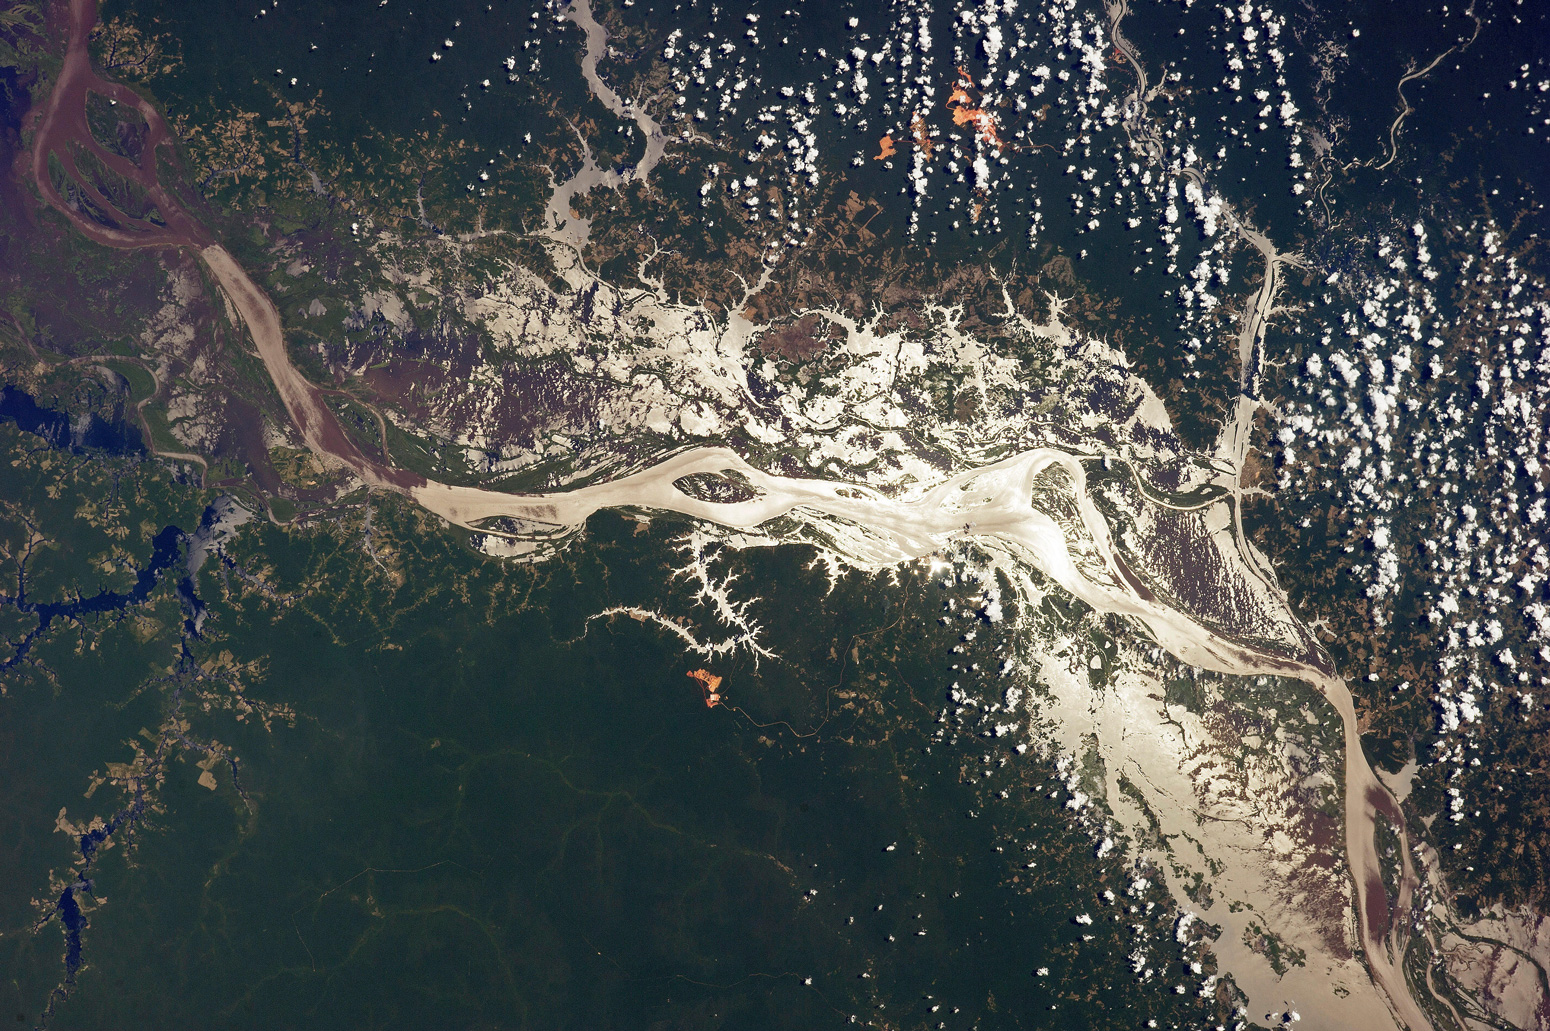 Satellite image of the Amazon river, South America. Credit: NASA Archive / Alamy Stock Photo